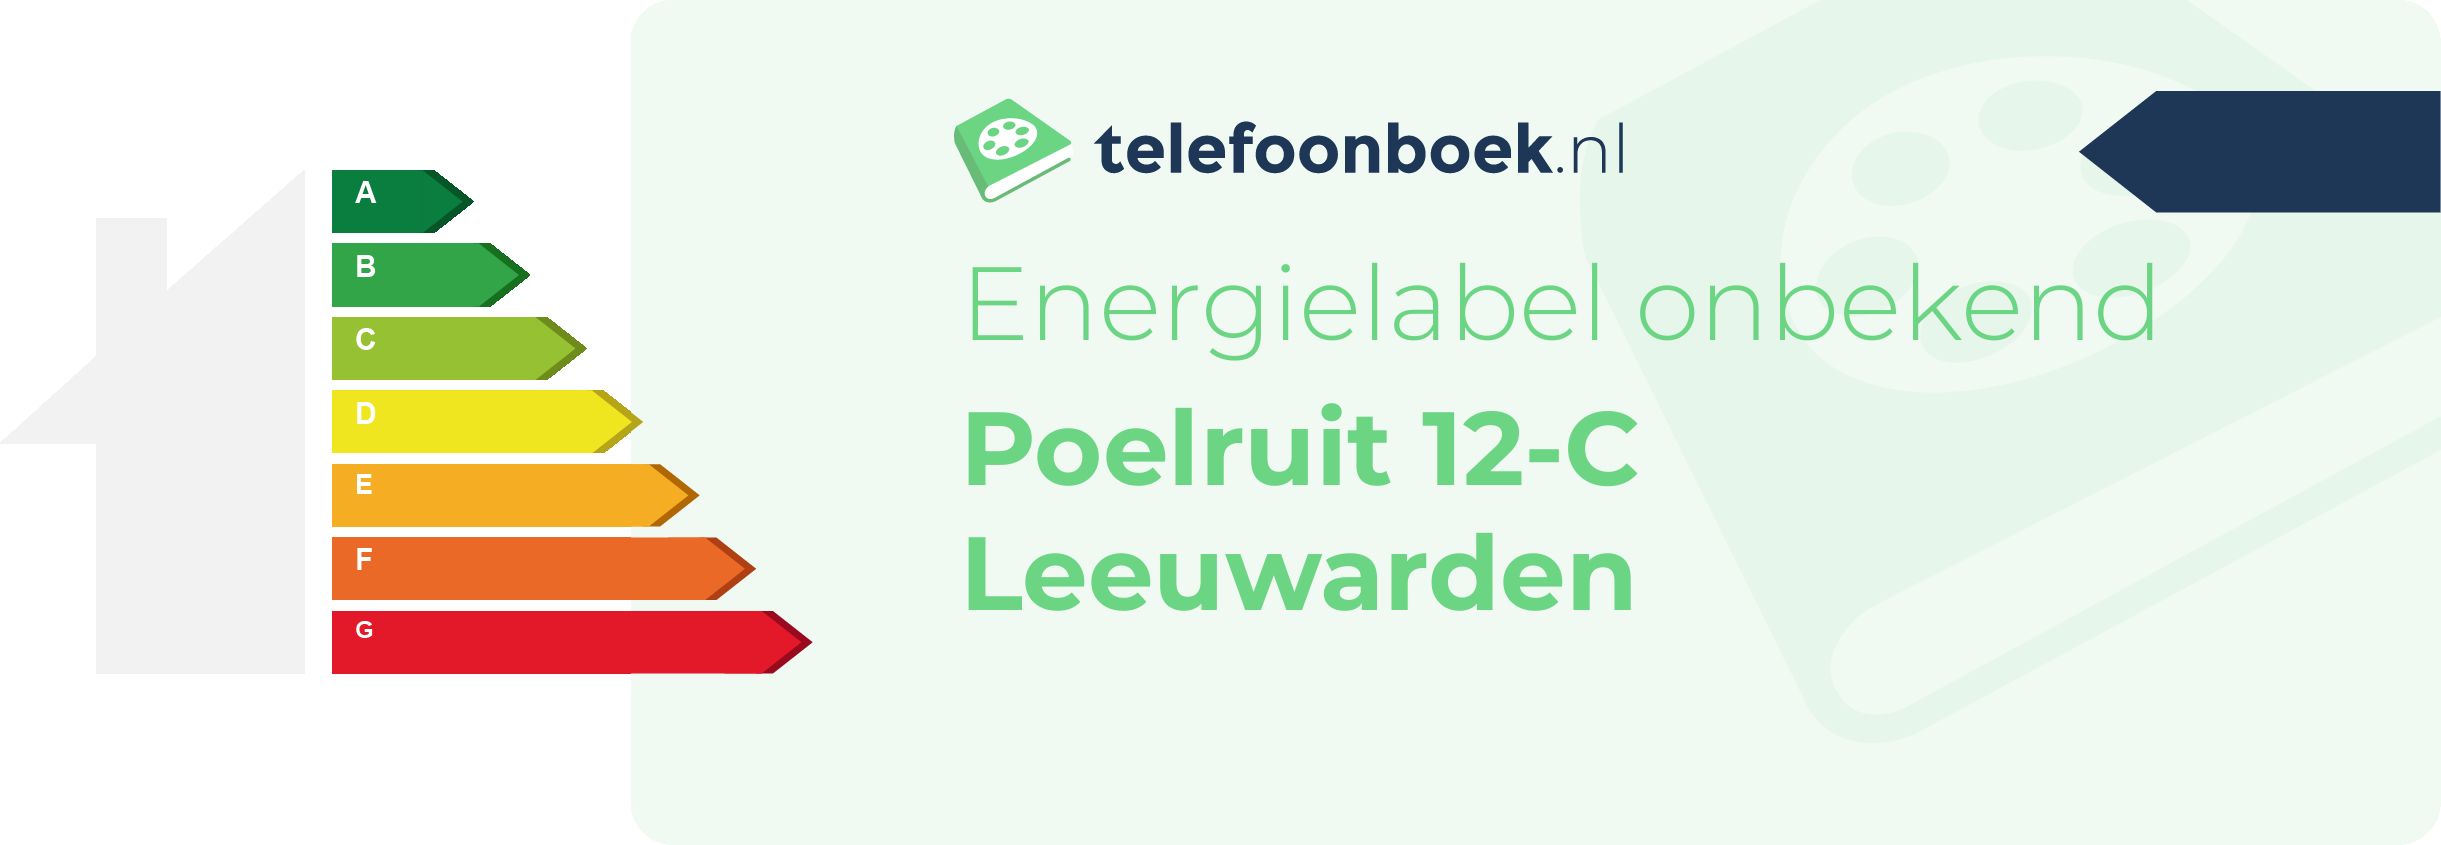 Energielabel Poelruit 12-C Leeuwarden